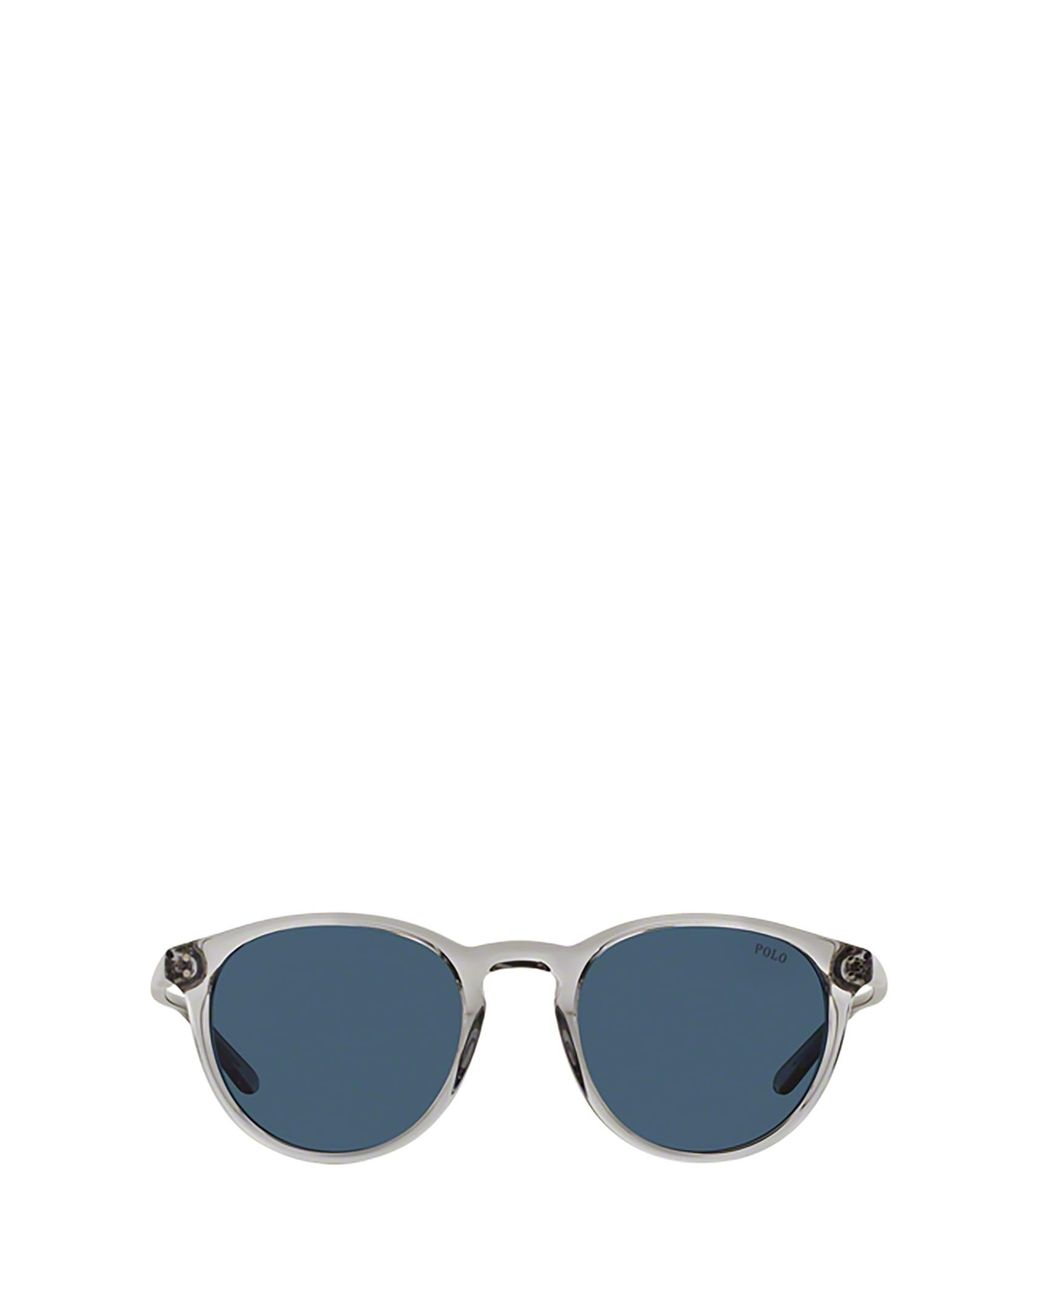 POLO RALPH LAUREN PH4110 SUNGLASSES | Men | Sunglasses | Eyewear |  Categories | Skysales SA Site